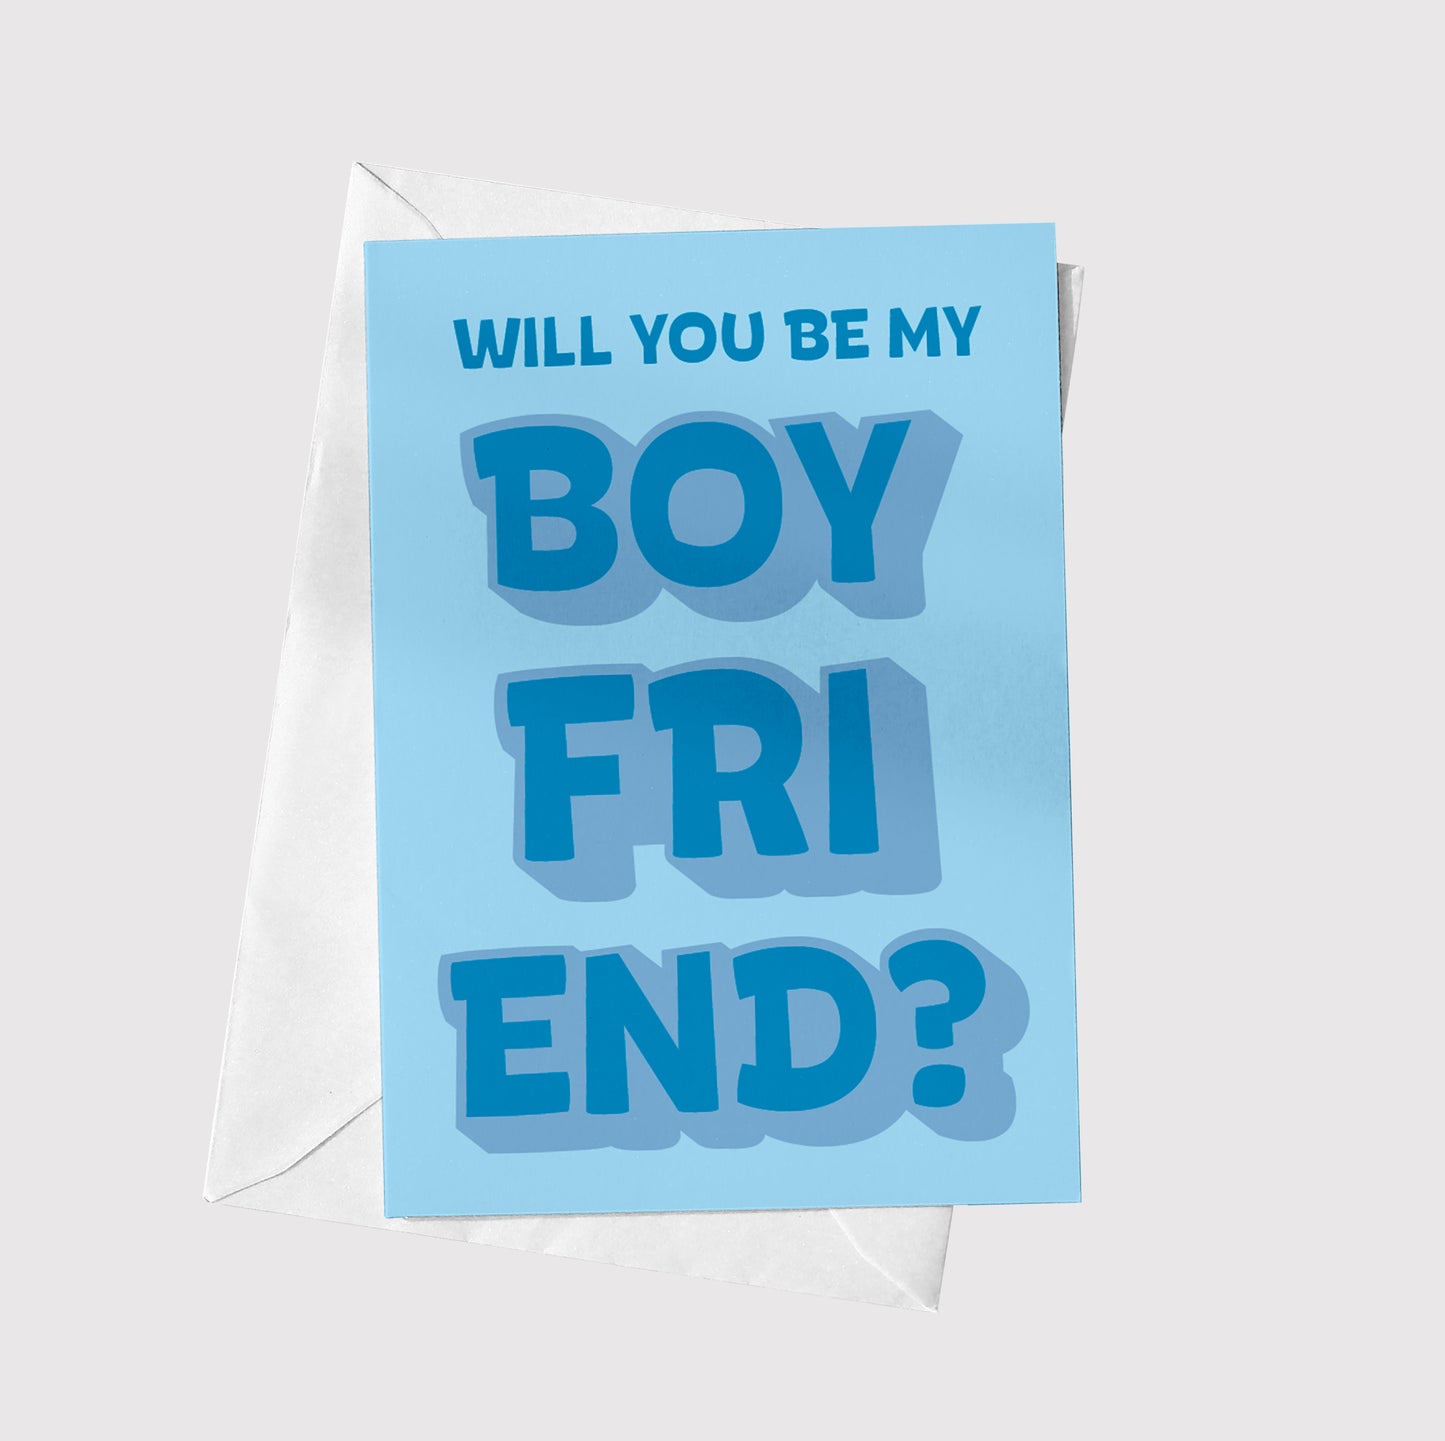 Will you be my boyfriend?